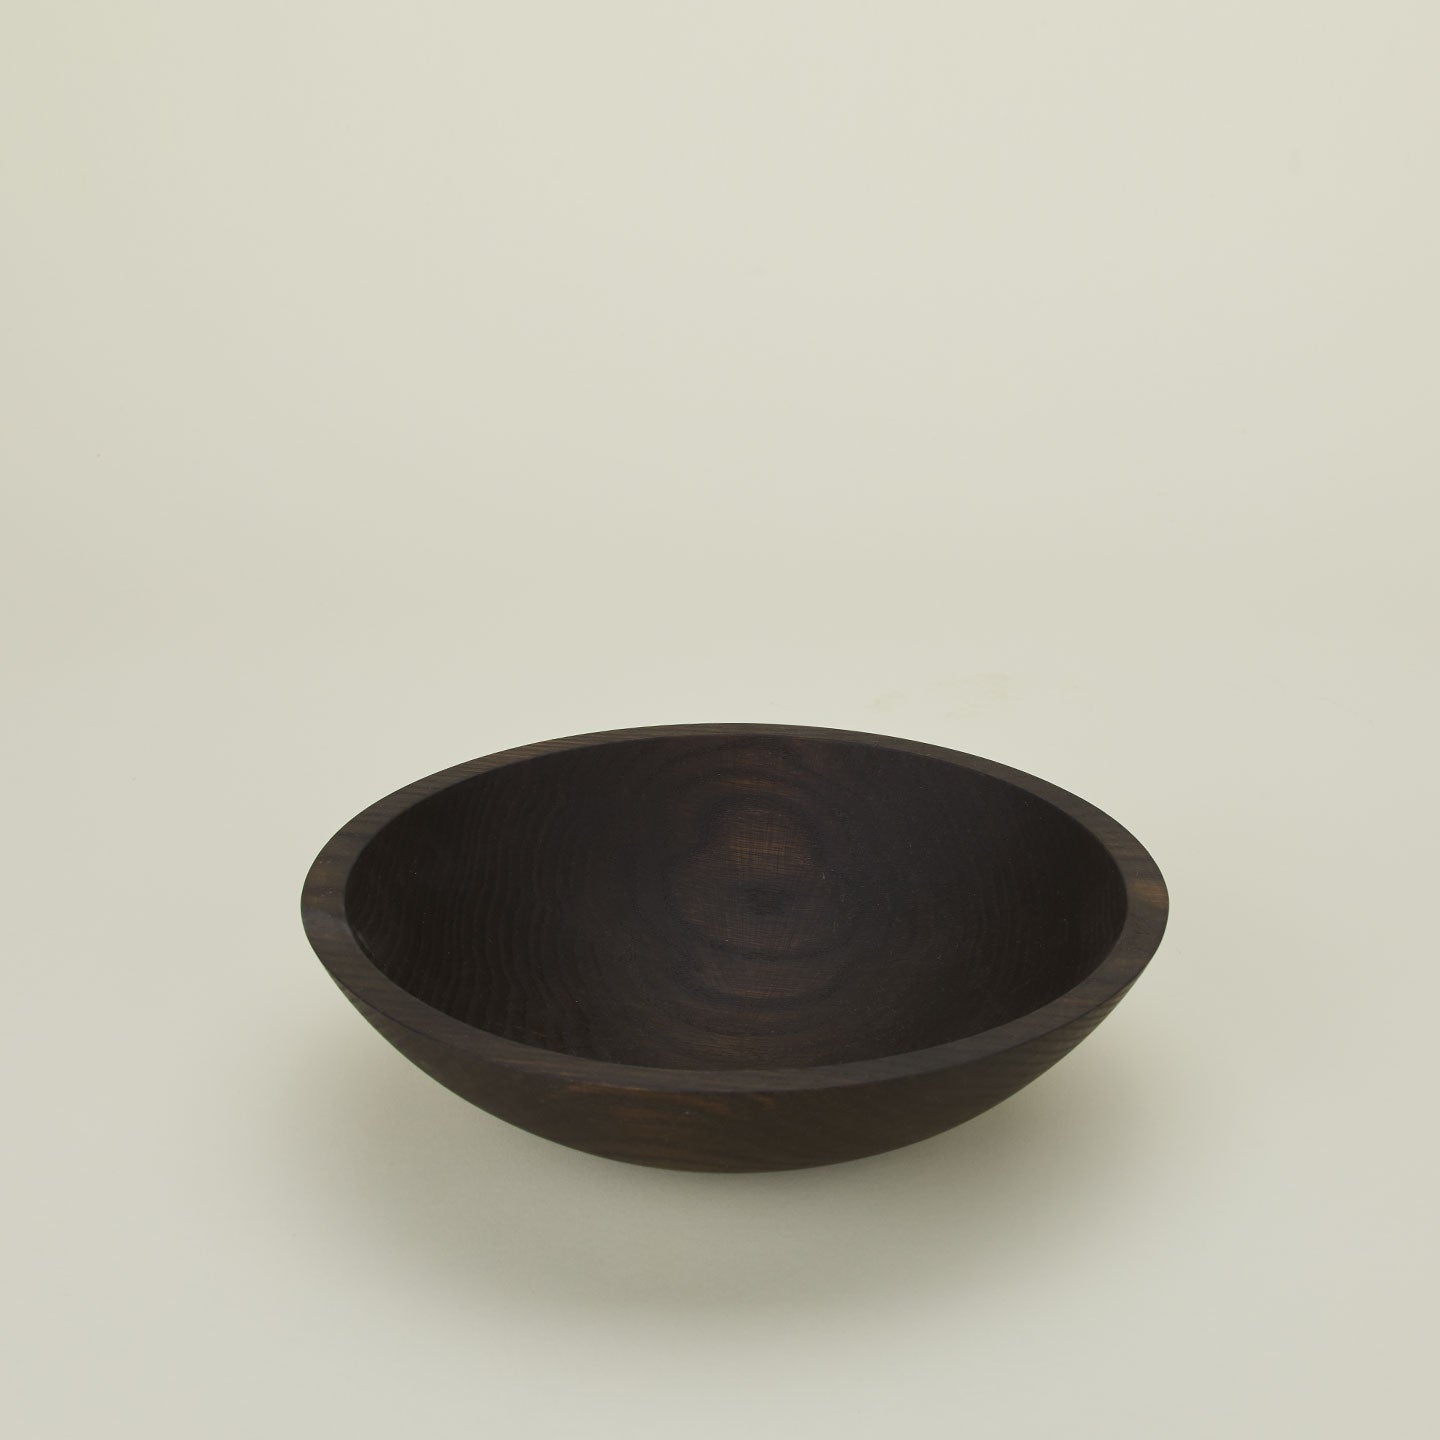 A close up  of a 12” ebonized oak  wood bowl.